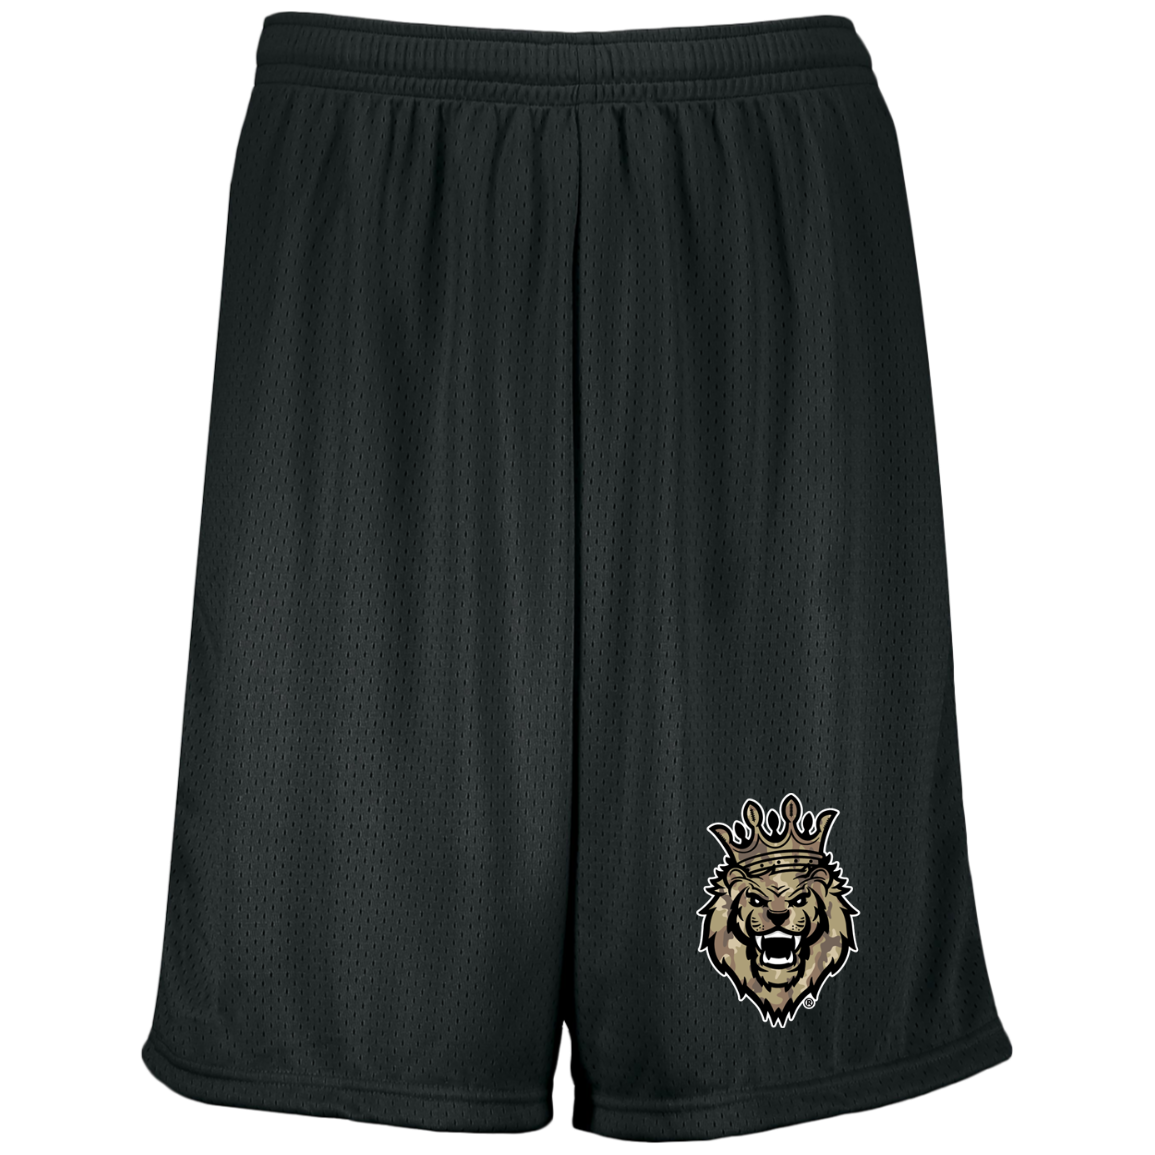 Respect The Roar® (Tan) Men's 9 inch Inseam Mesh Shorts